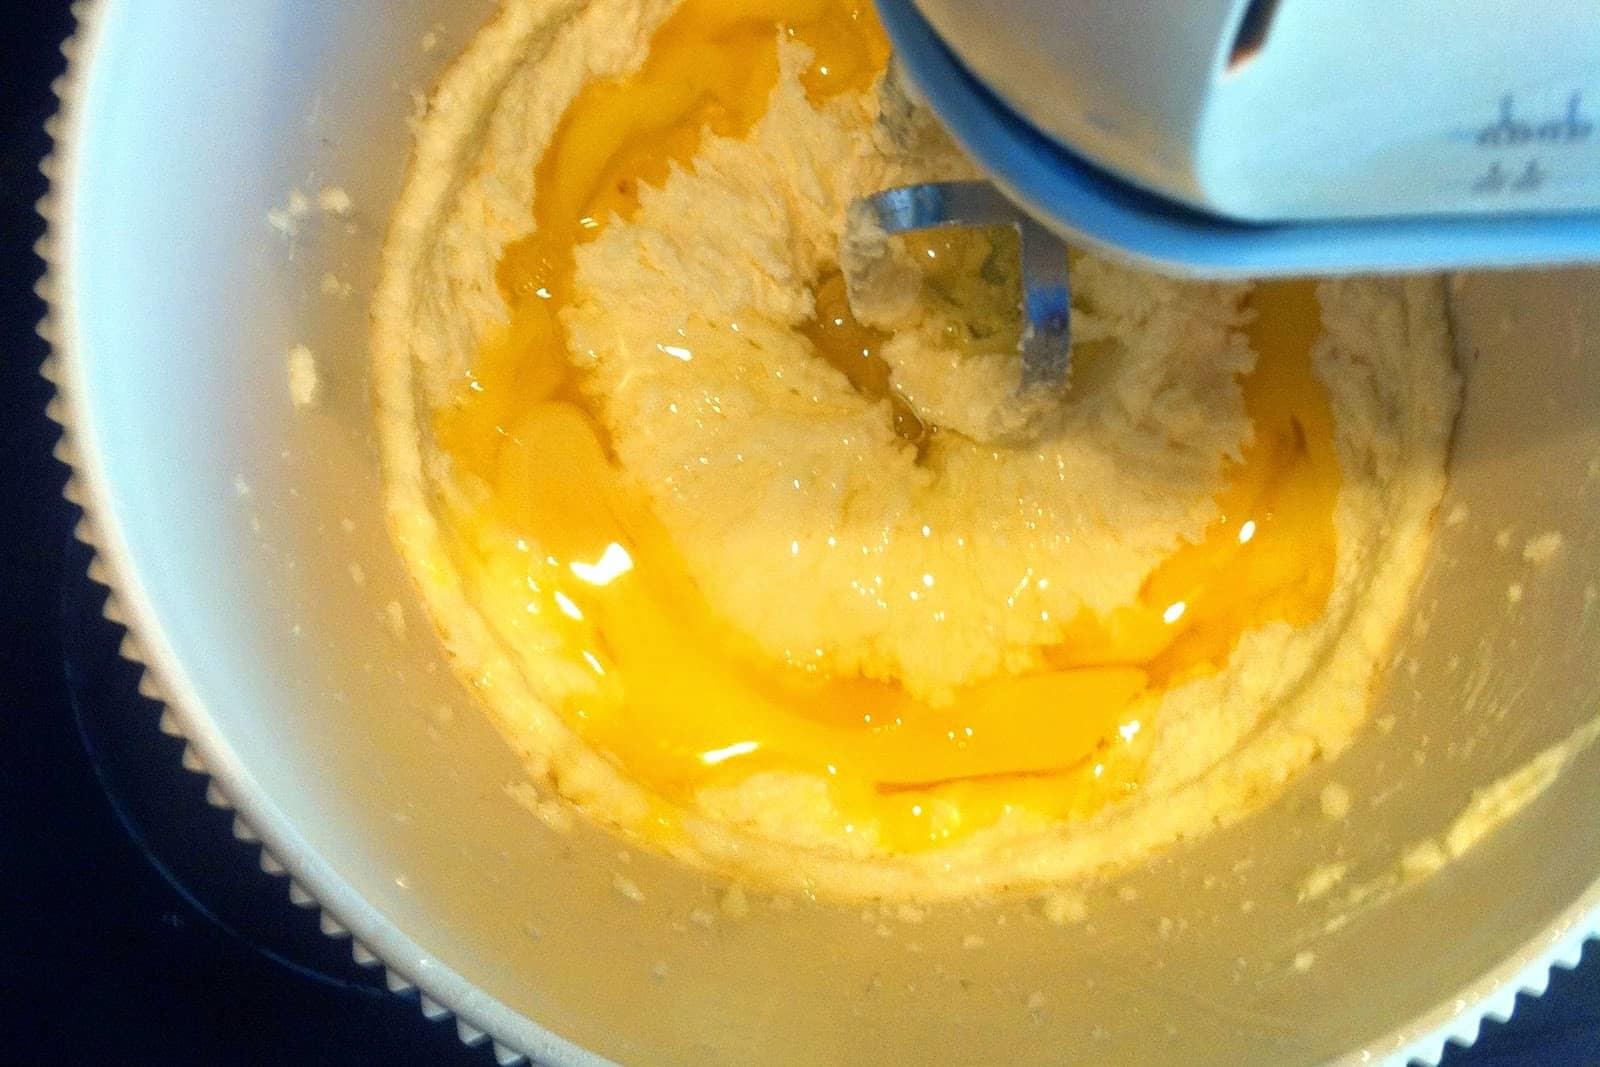 Bωμάκια μαγειρέματος: λιώστε το βούτυρο σε ένα τηγάνι, προσθέστε βανιλίνη, αλάτι, ζάχαρη, 1 αυγό και φυτικό έλαιο. Ανακατεύουμε όλη αυτή τη μάζα